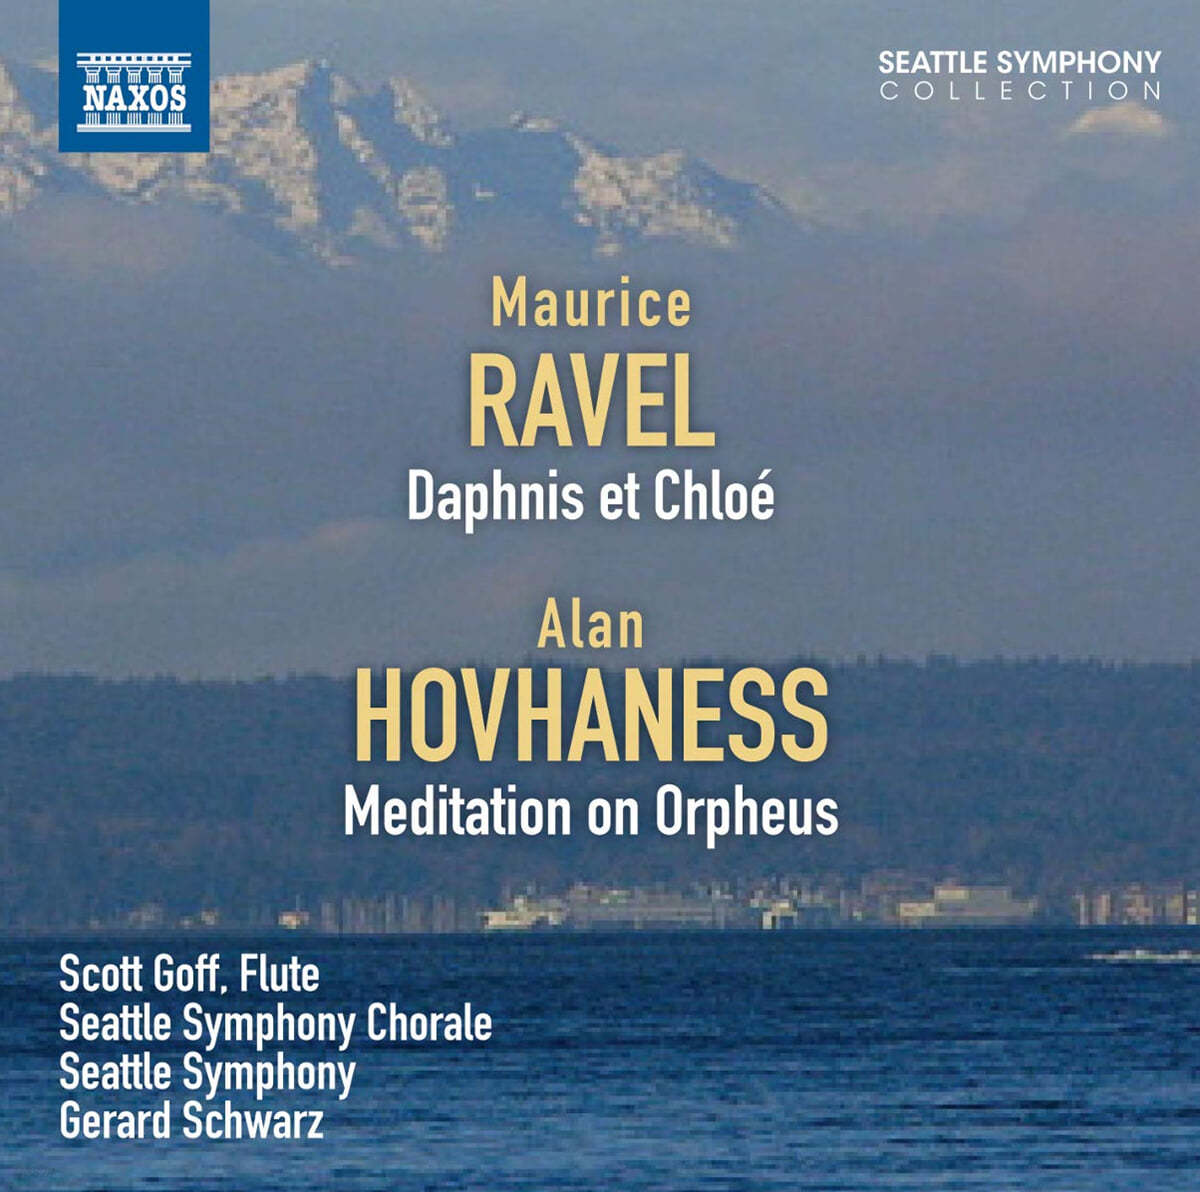 Gerard Schwarz 라벨: 발레 '다프니스와 클로에' 전곡 / 호바네스: 오르페우스 명상곡 (Ravel: Daphnis et Chloe / Hovhaness: Meditation on Orpheus) 